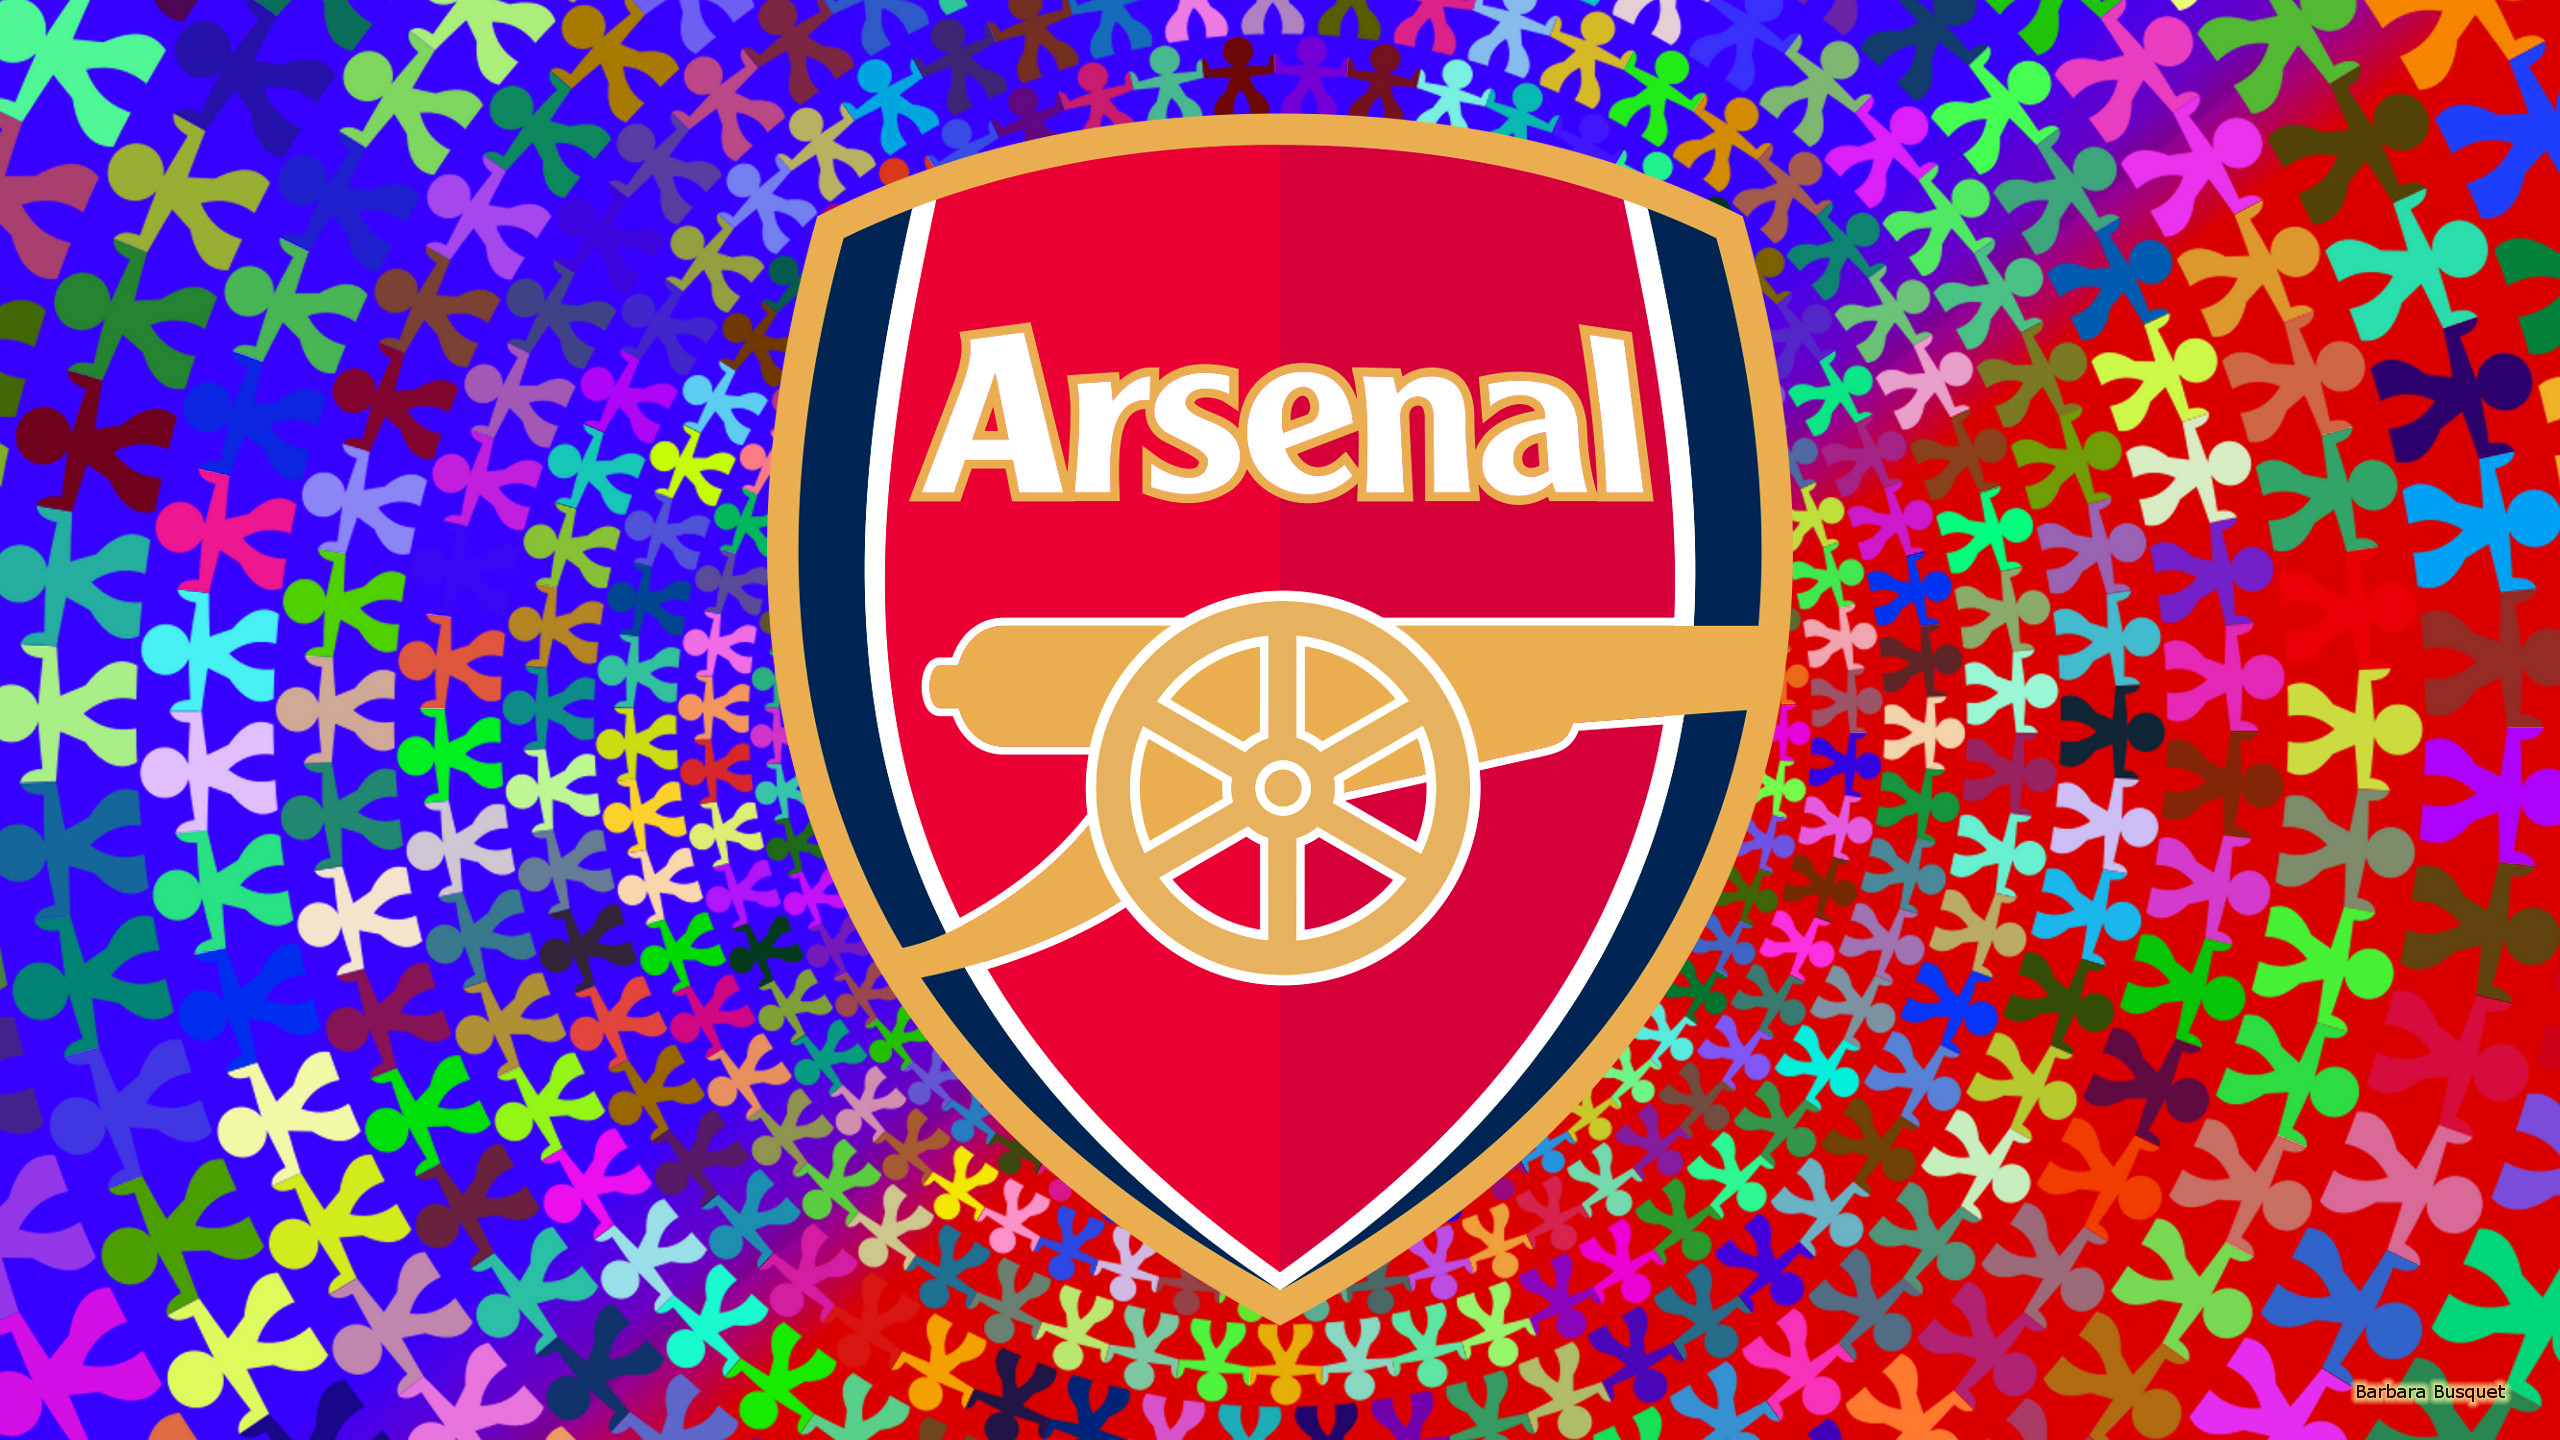 Arsenal fc logo wallpapers